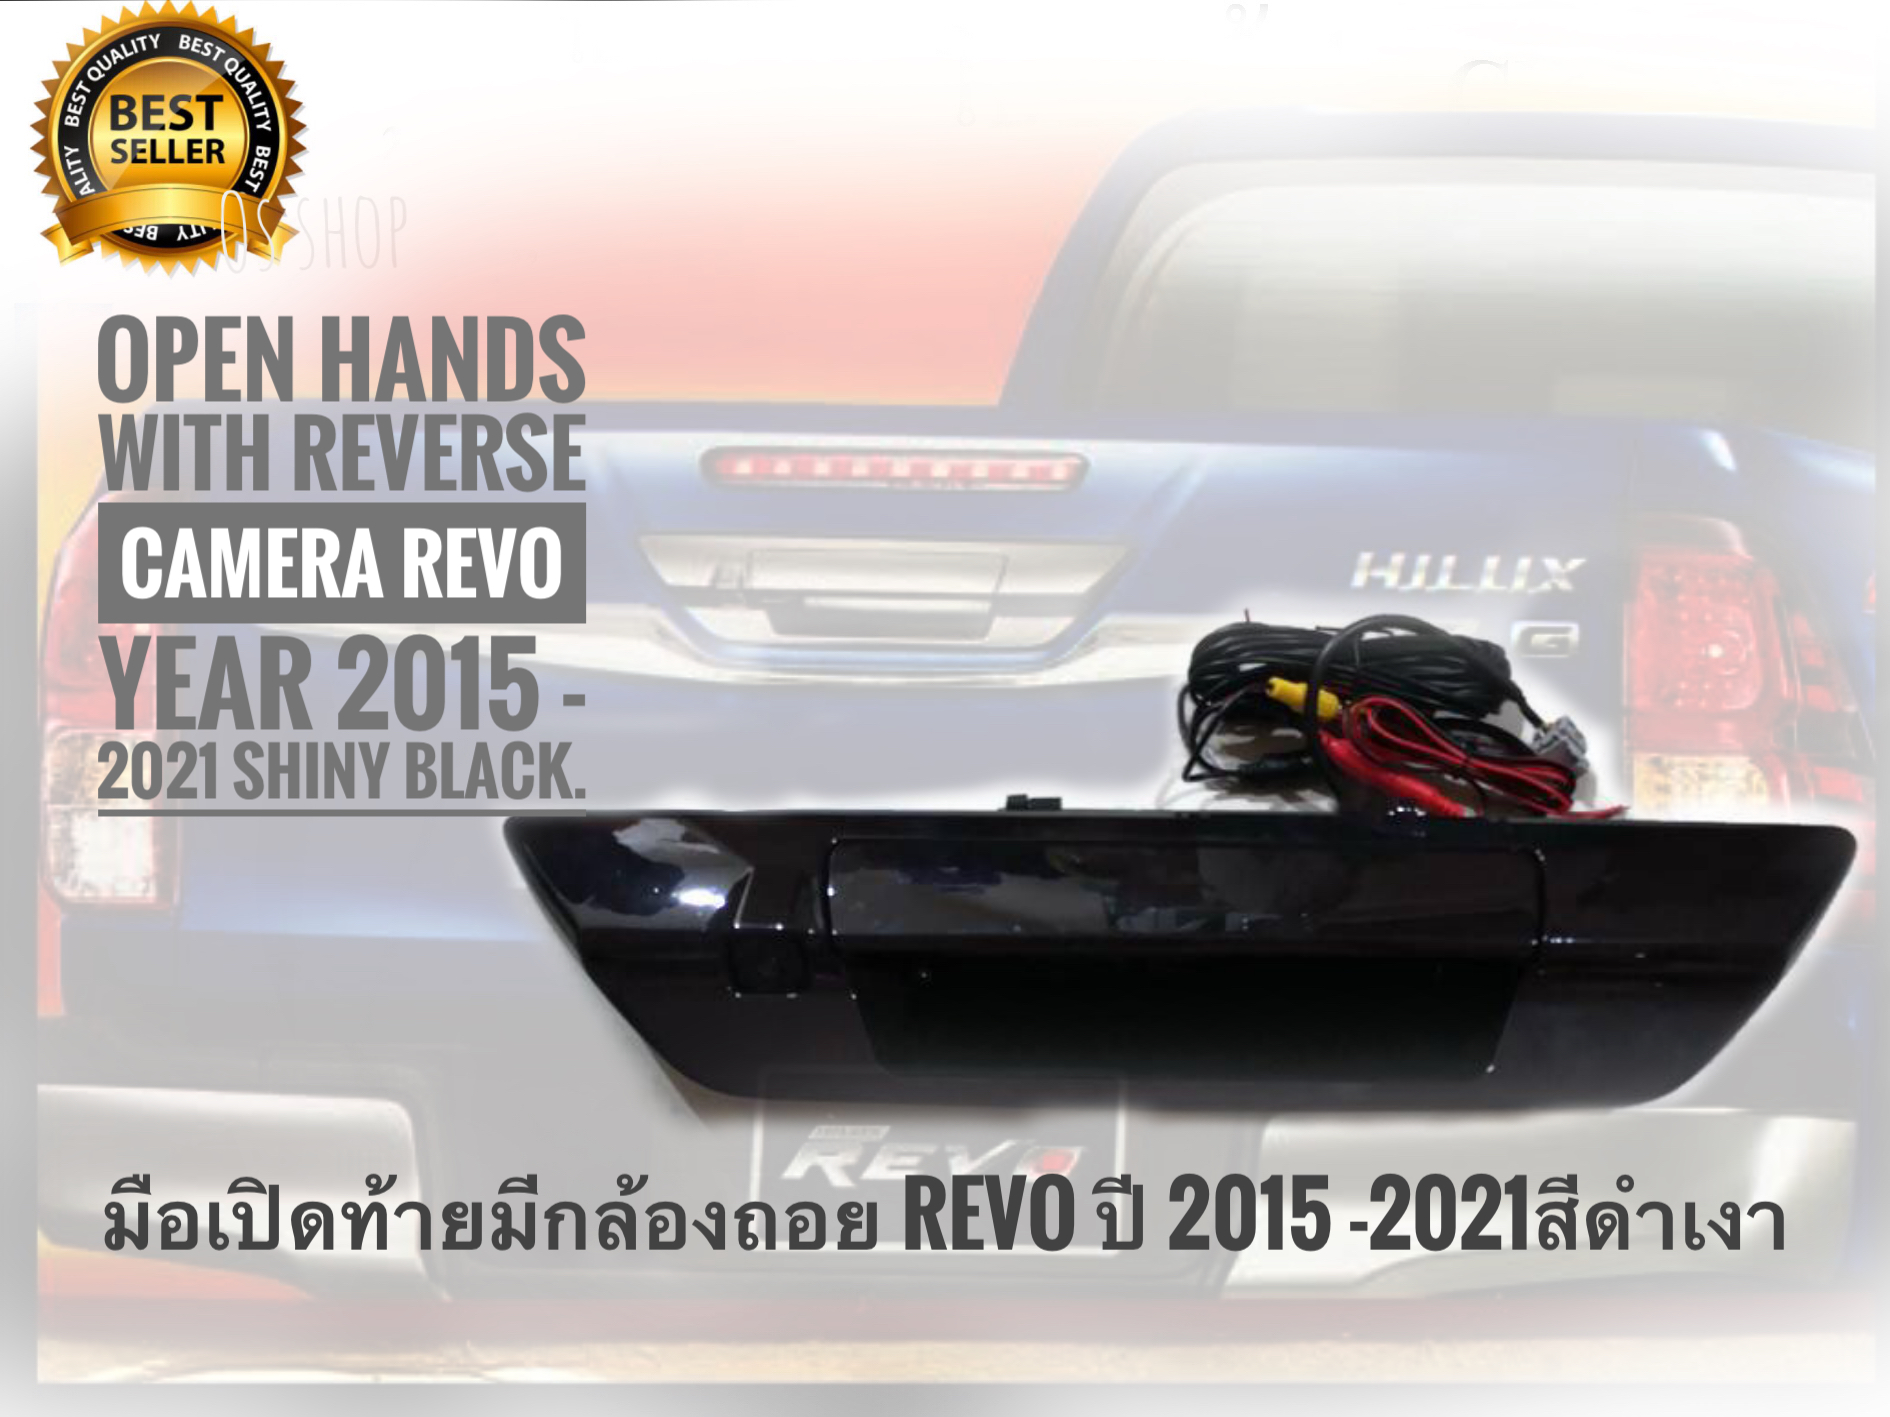 Tkt ชุดมือเปิดท้ายมีกล้องถอย Toyota Revo ปี 2015 -​2021 สีดำเงาๆๆๆ **มาร้านนี่จบในที่เดียว**